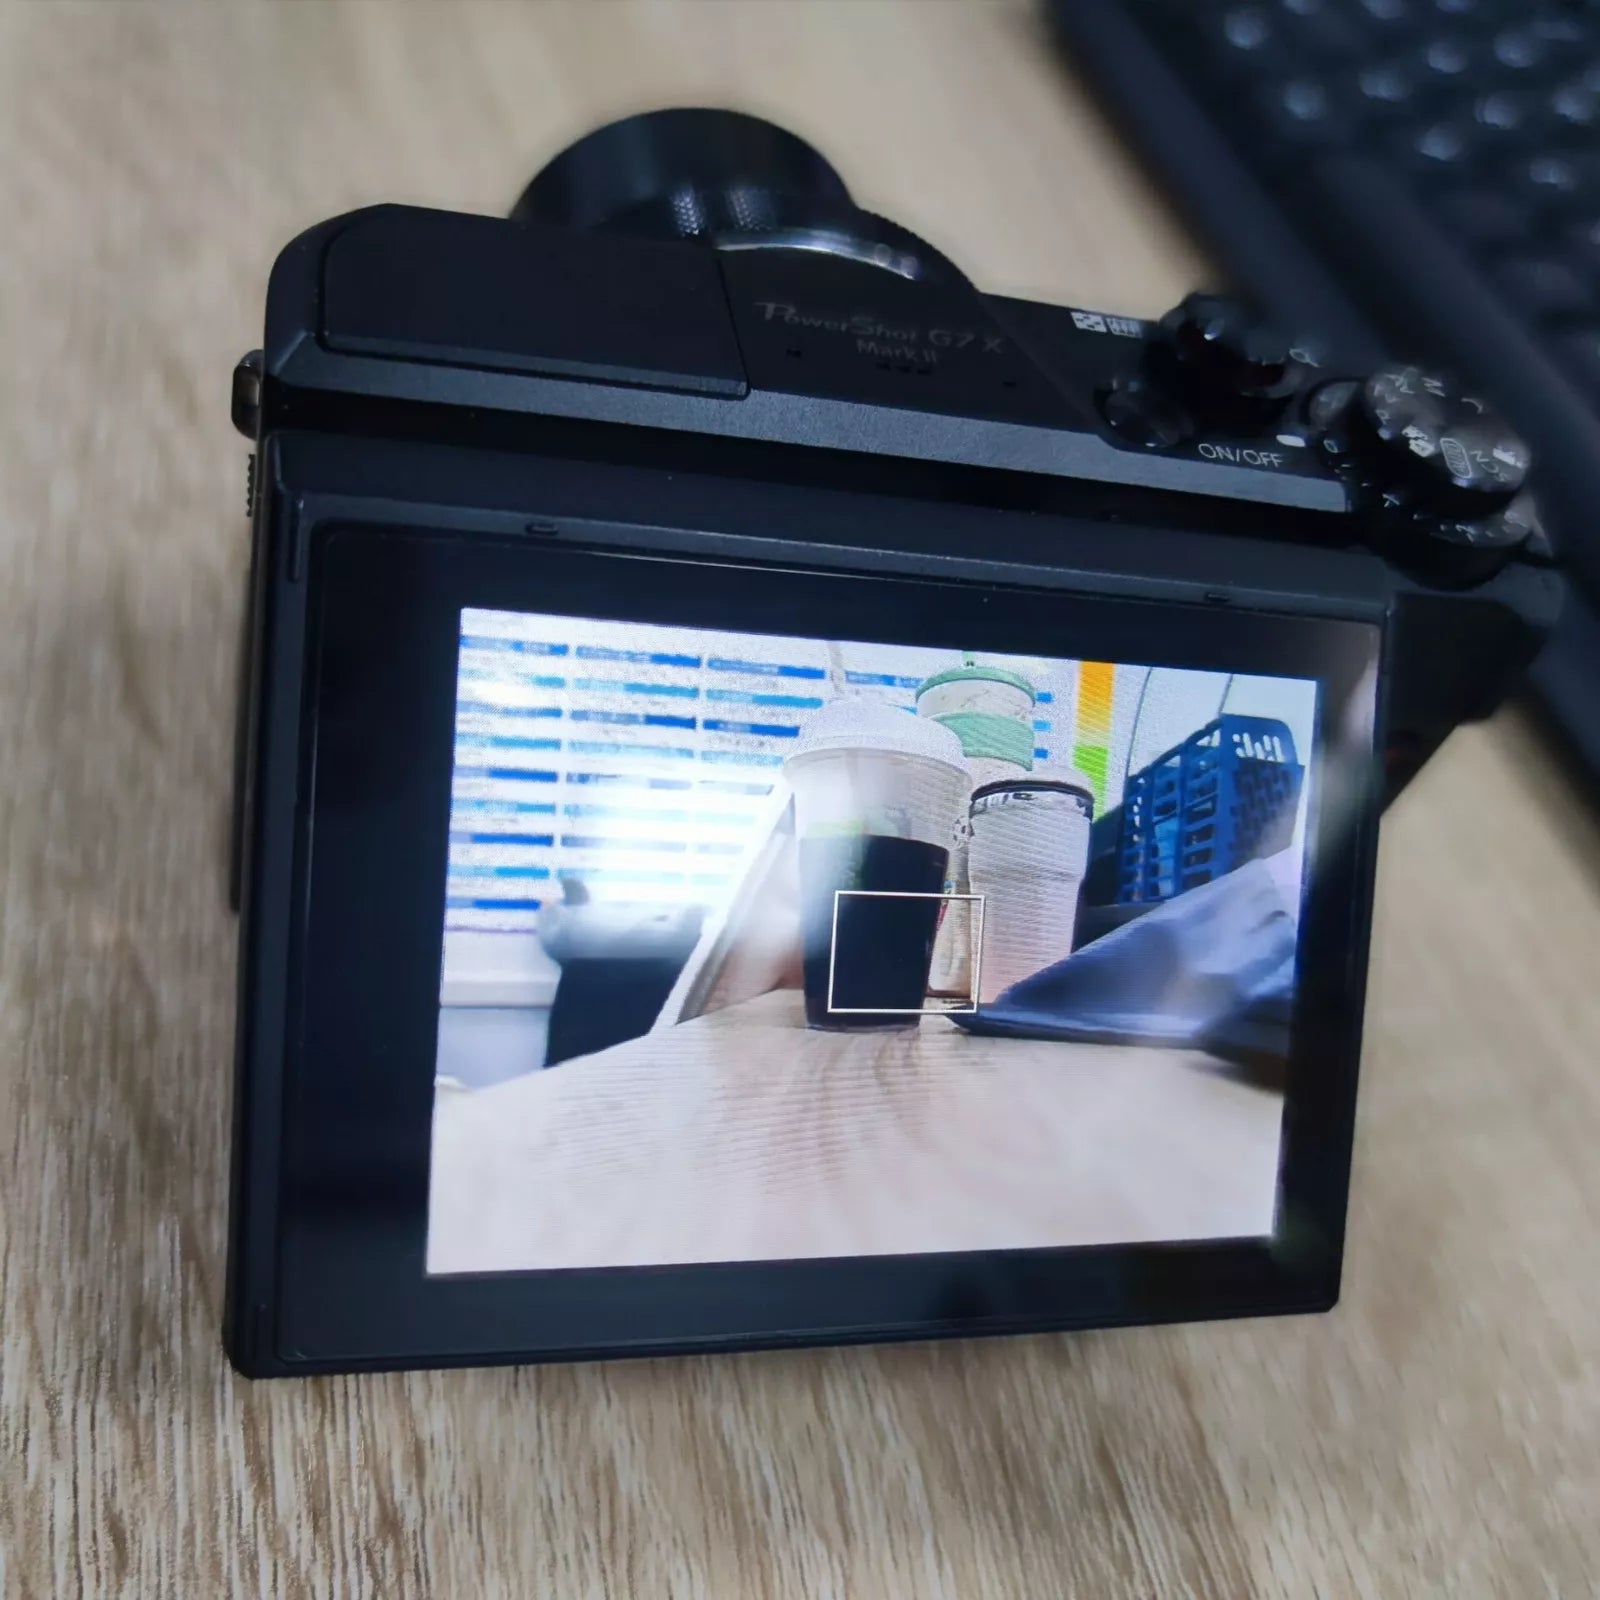 Canon PowerShot G7 X Mark II 20.2MP Digital Camera with Wi-Fi&NFC--Black 90%NEW